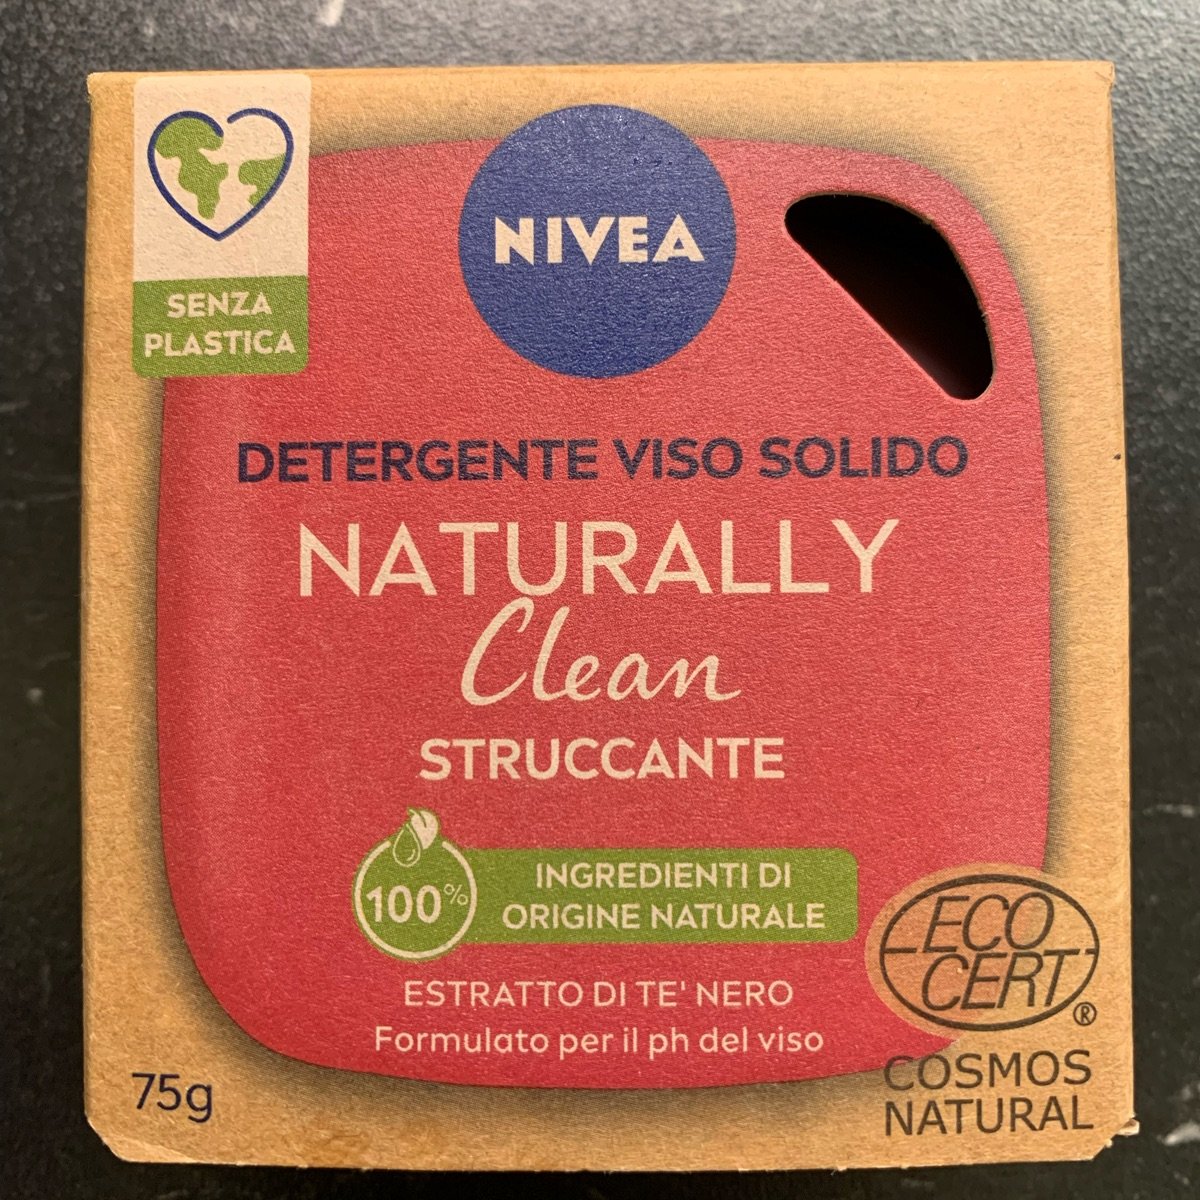 Nivea Detergente Viso Solido “Naturally Clean” Struccante Review | abillion